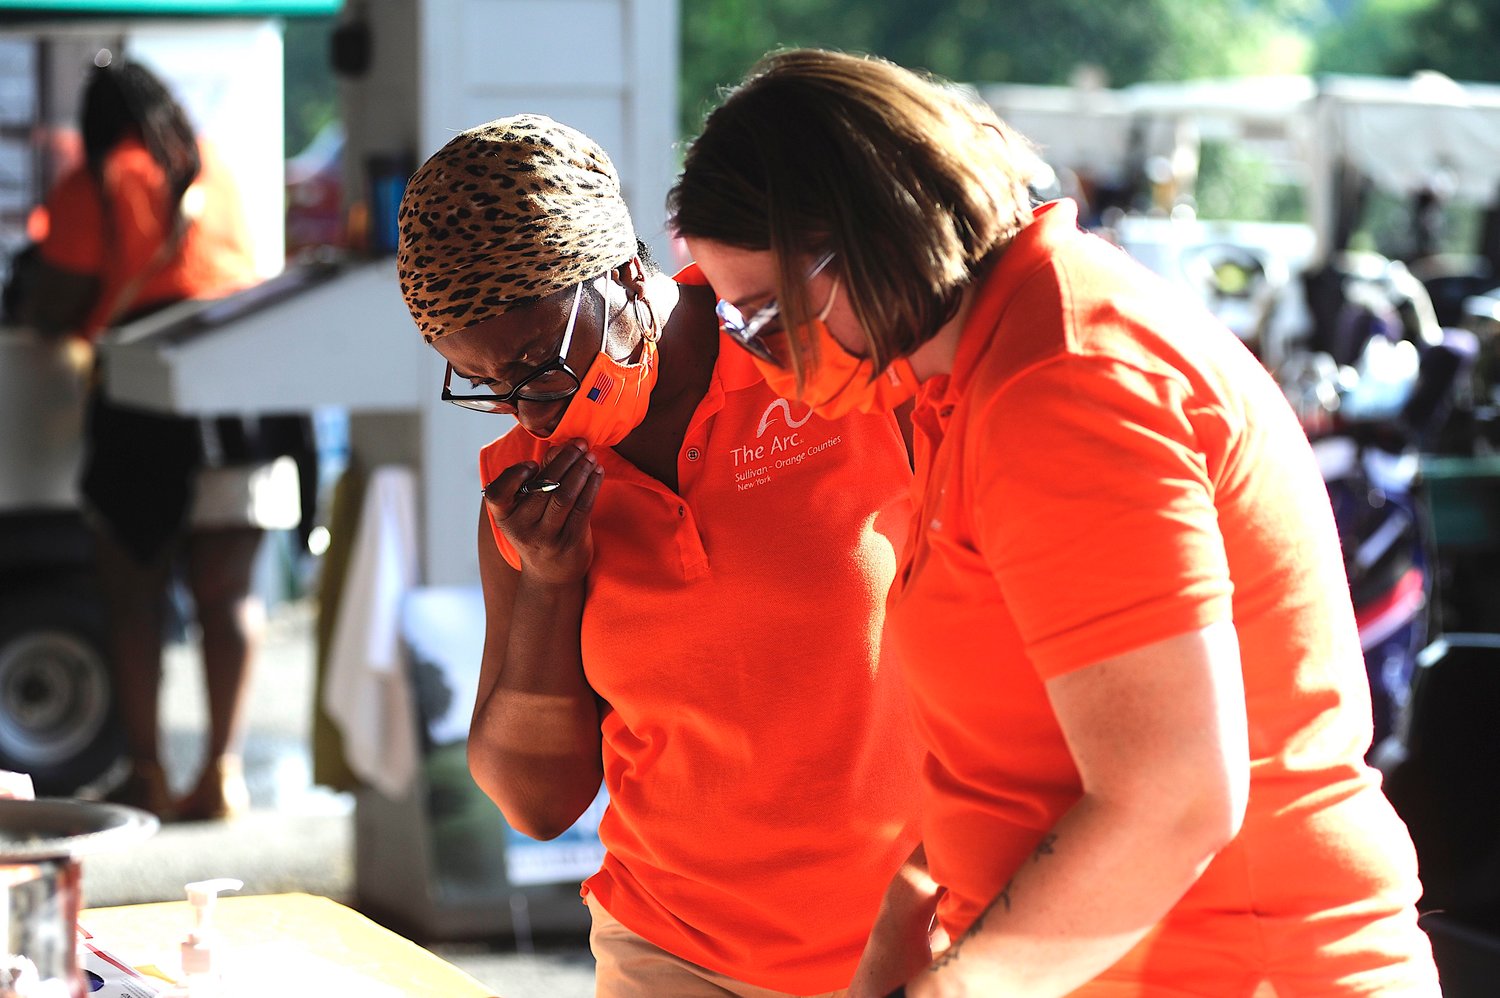 Working hard to keep everyone safe. The Arc Sullivan-Orange staffers Meagan Smith and Regina McKenney Snead.